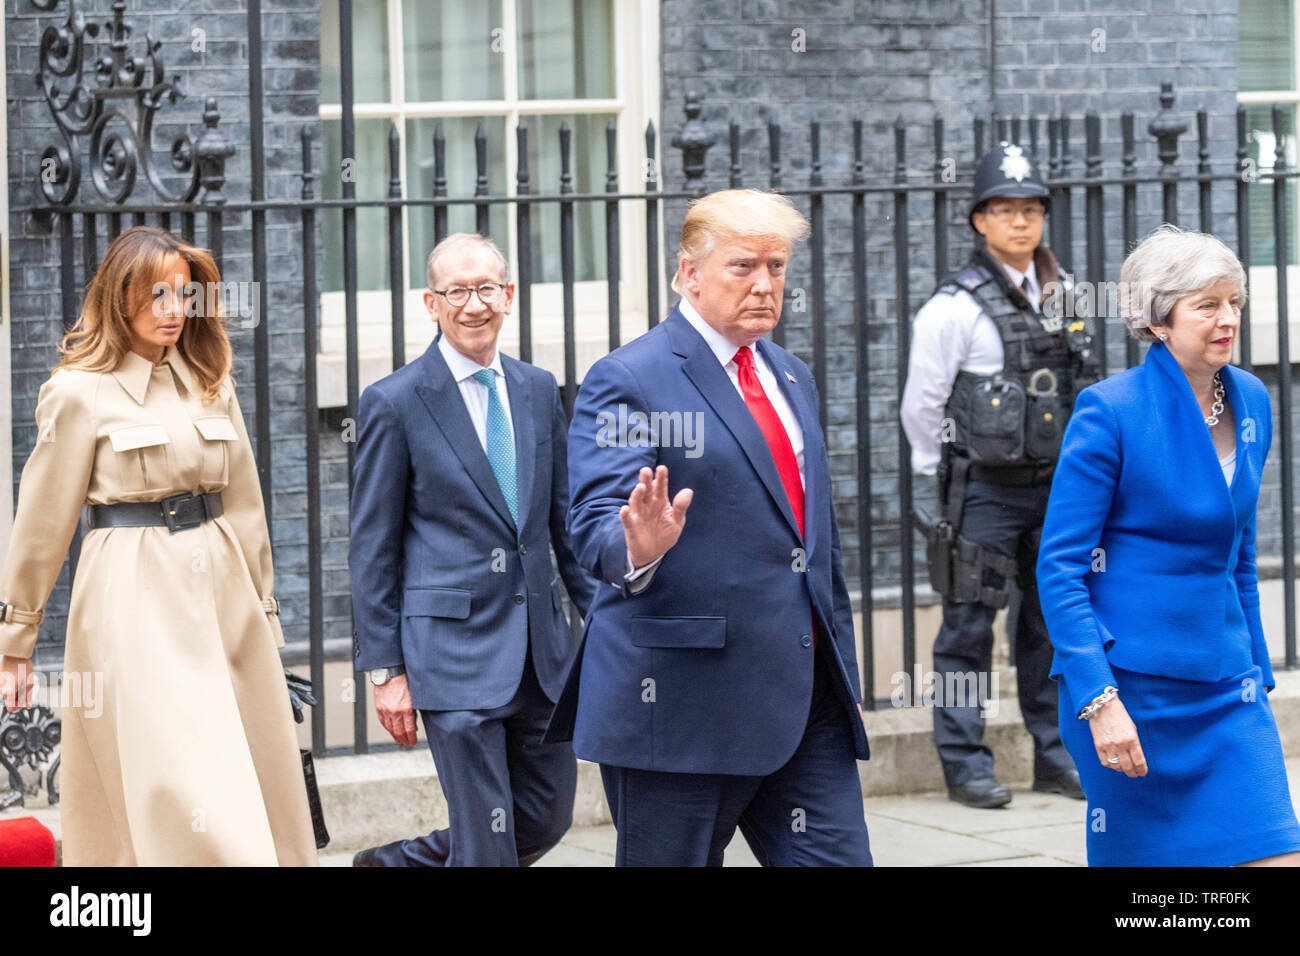 London, 4. Juni 2019 Präsident Trump visits Theresa May MP PC, Premierminister in Dowing Straße Donald Trump und Theresa May 10 Downing Street, um auf der conferencce Credit Ian Davidson Alamy Leben Nachrichten hinterlassen Stockfoto